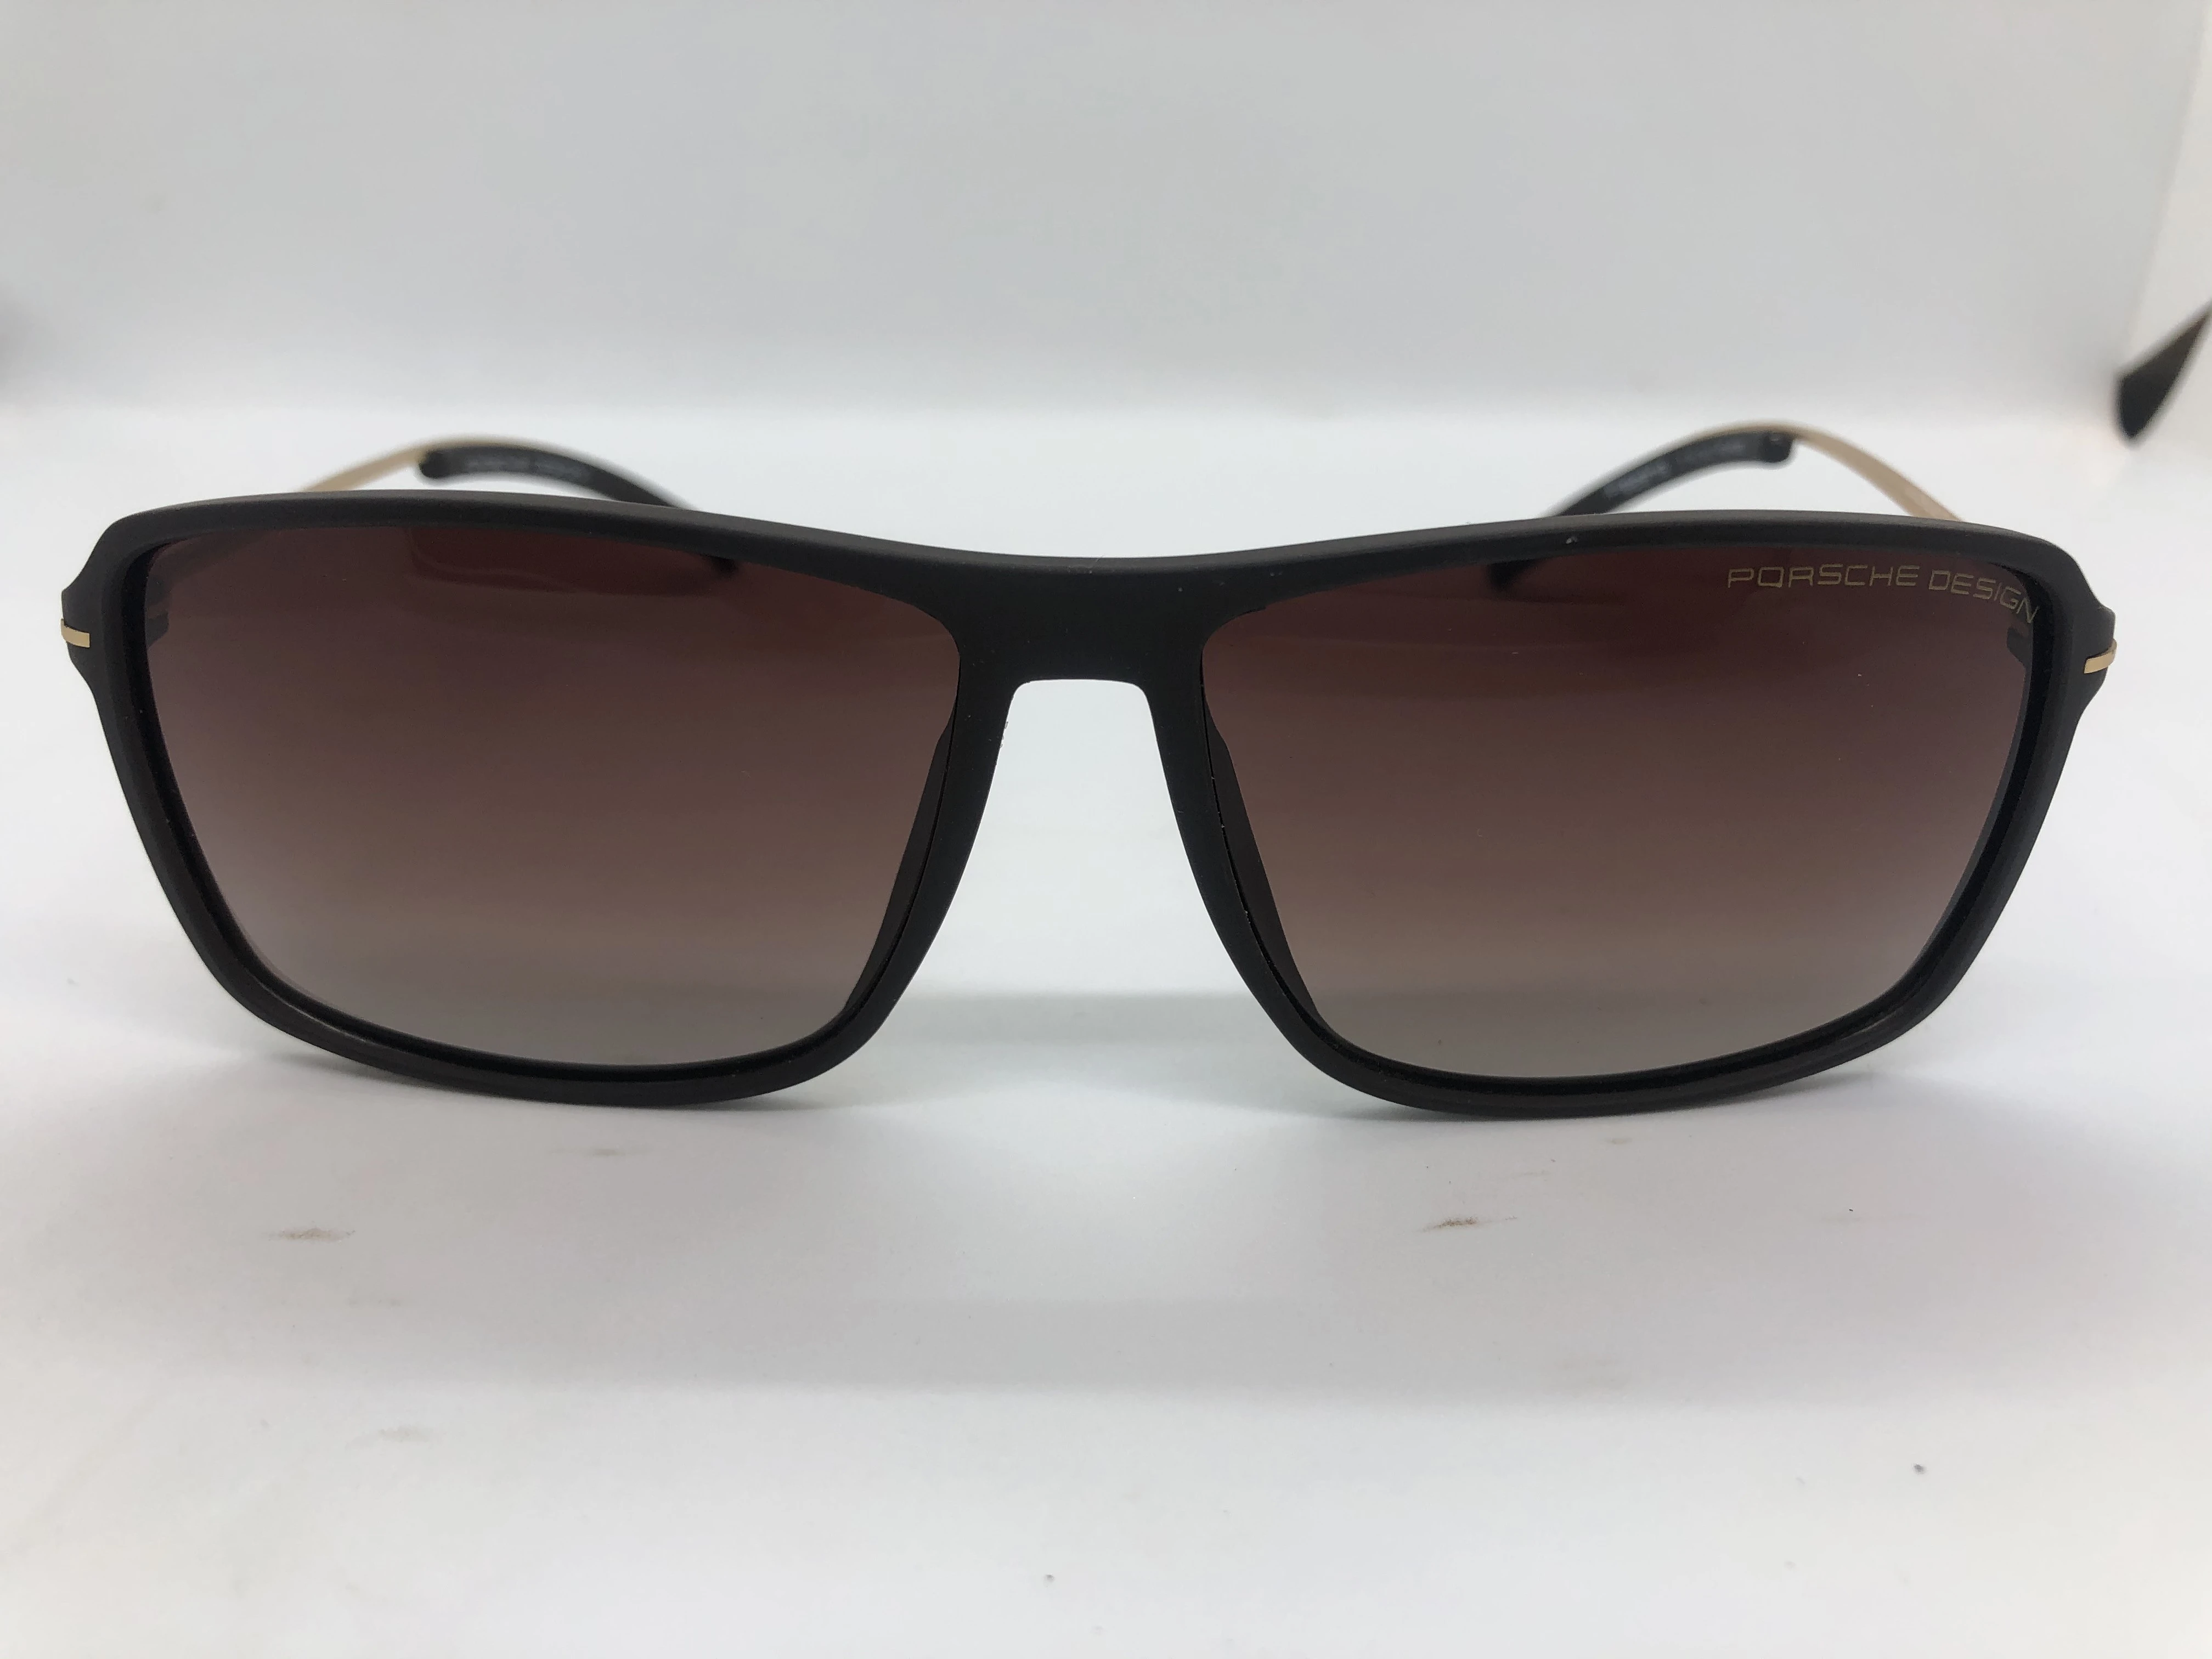 Sunglasses - Porsche Design - Dark Brown Polycarbonate Frame - Hazel Lenses - Gold Metal * Dark Brown - For Men